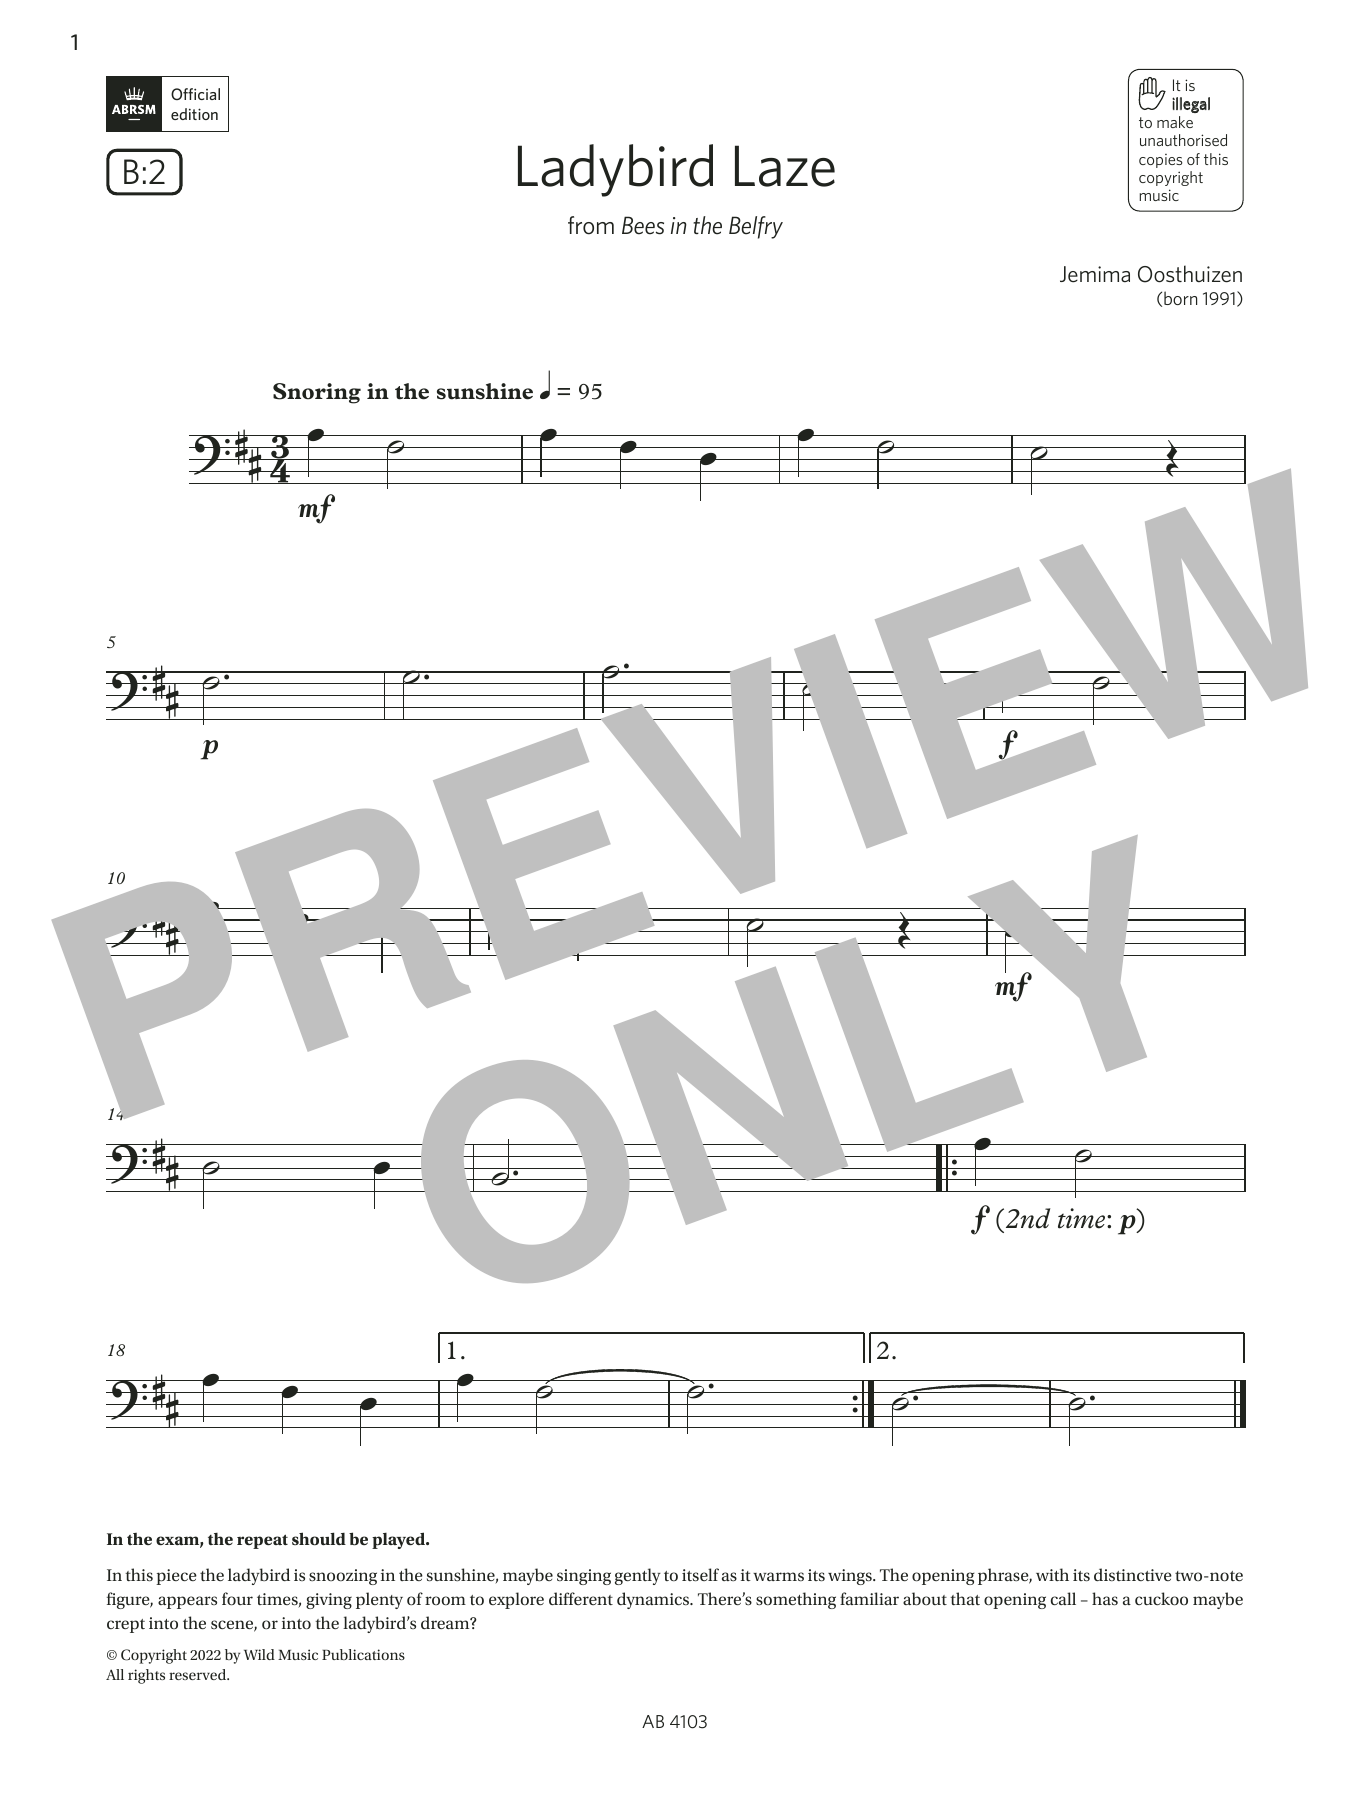 Download Jemima Oosthuizen Ladybird Laze (Grade Initial, B2, from Sheet Music